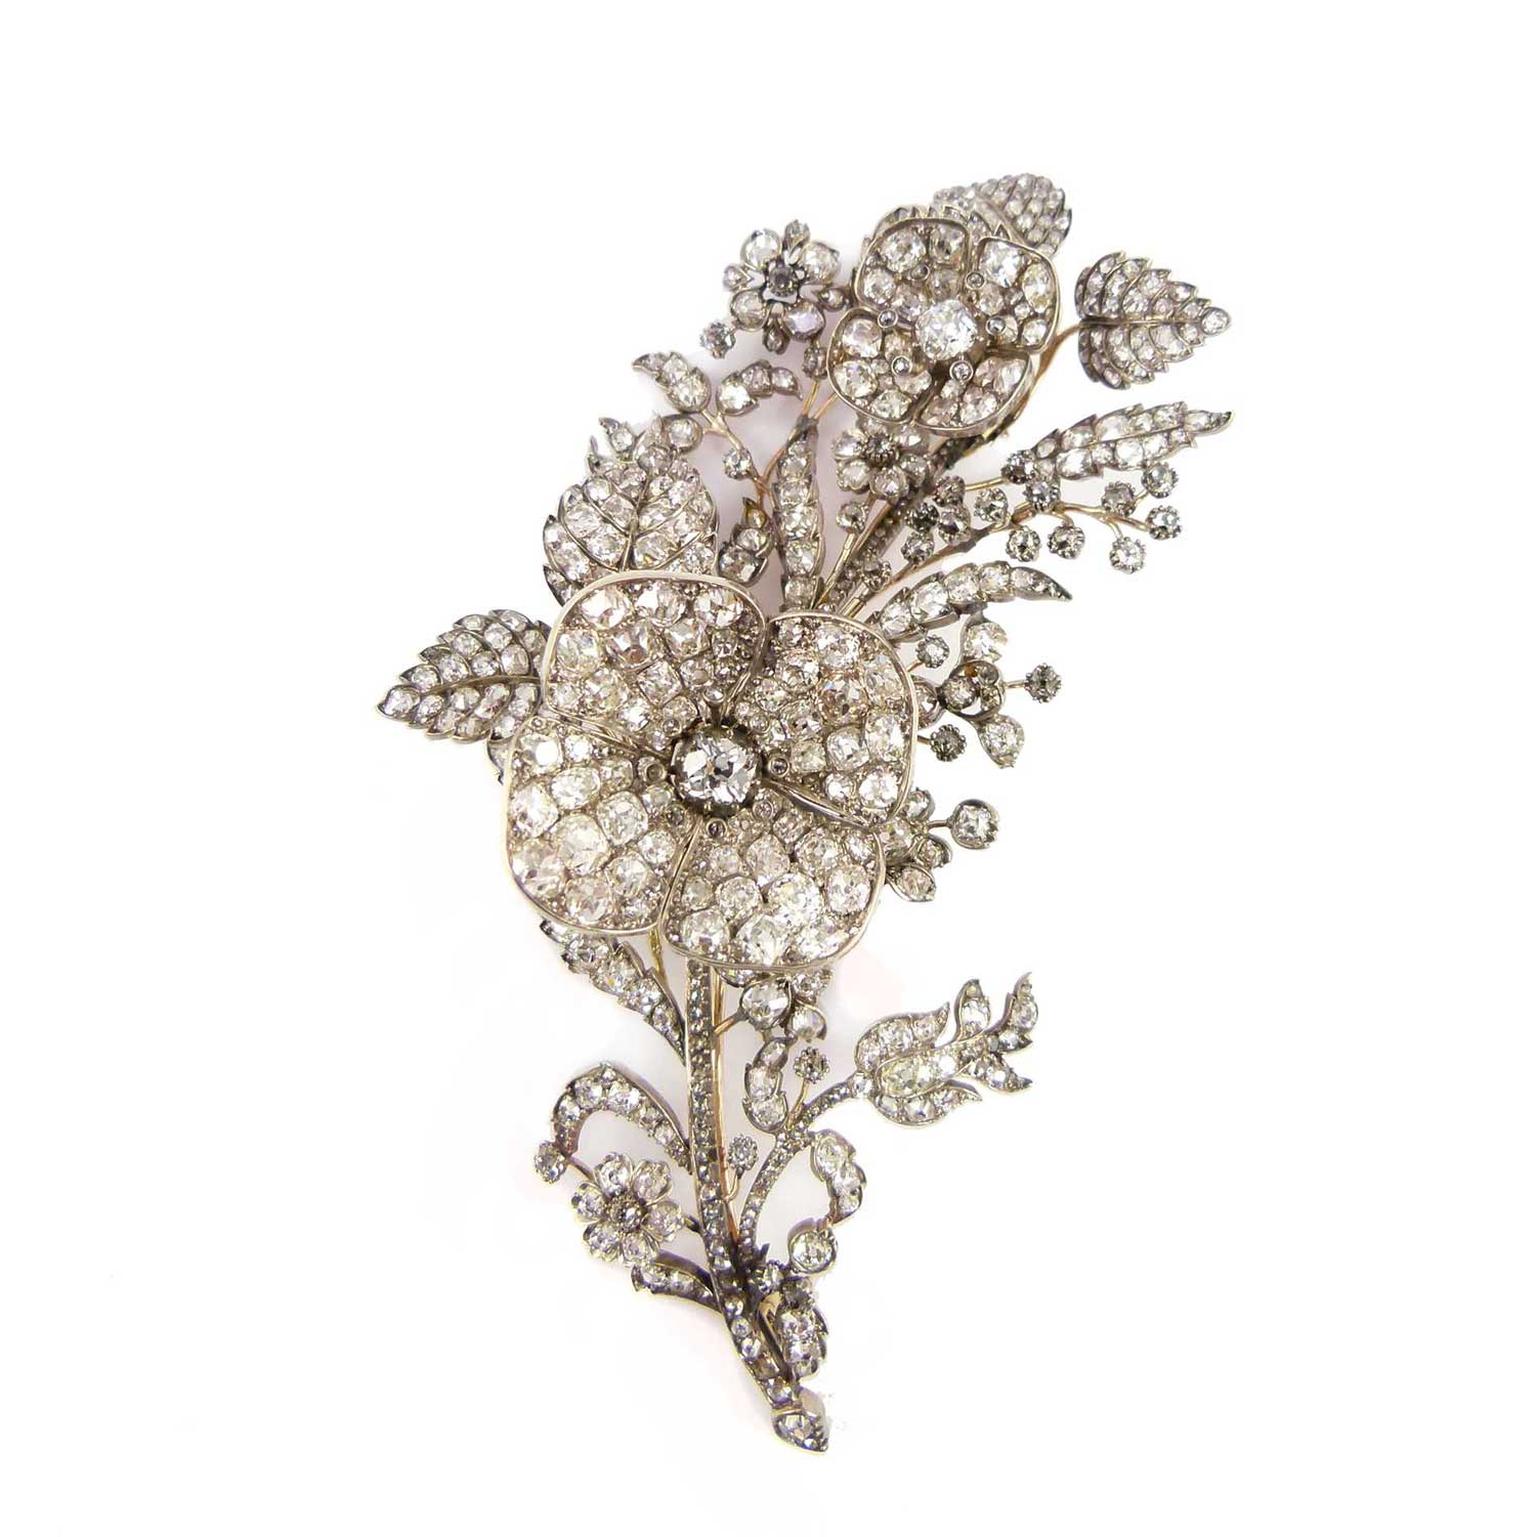 S.J. Phillips en tremblant antique floral spray and diamond brooch